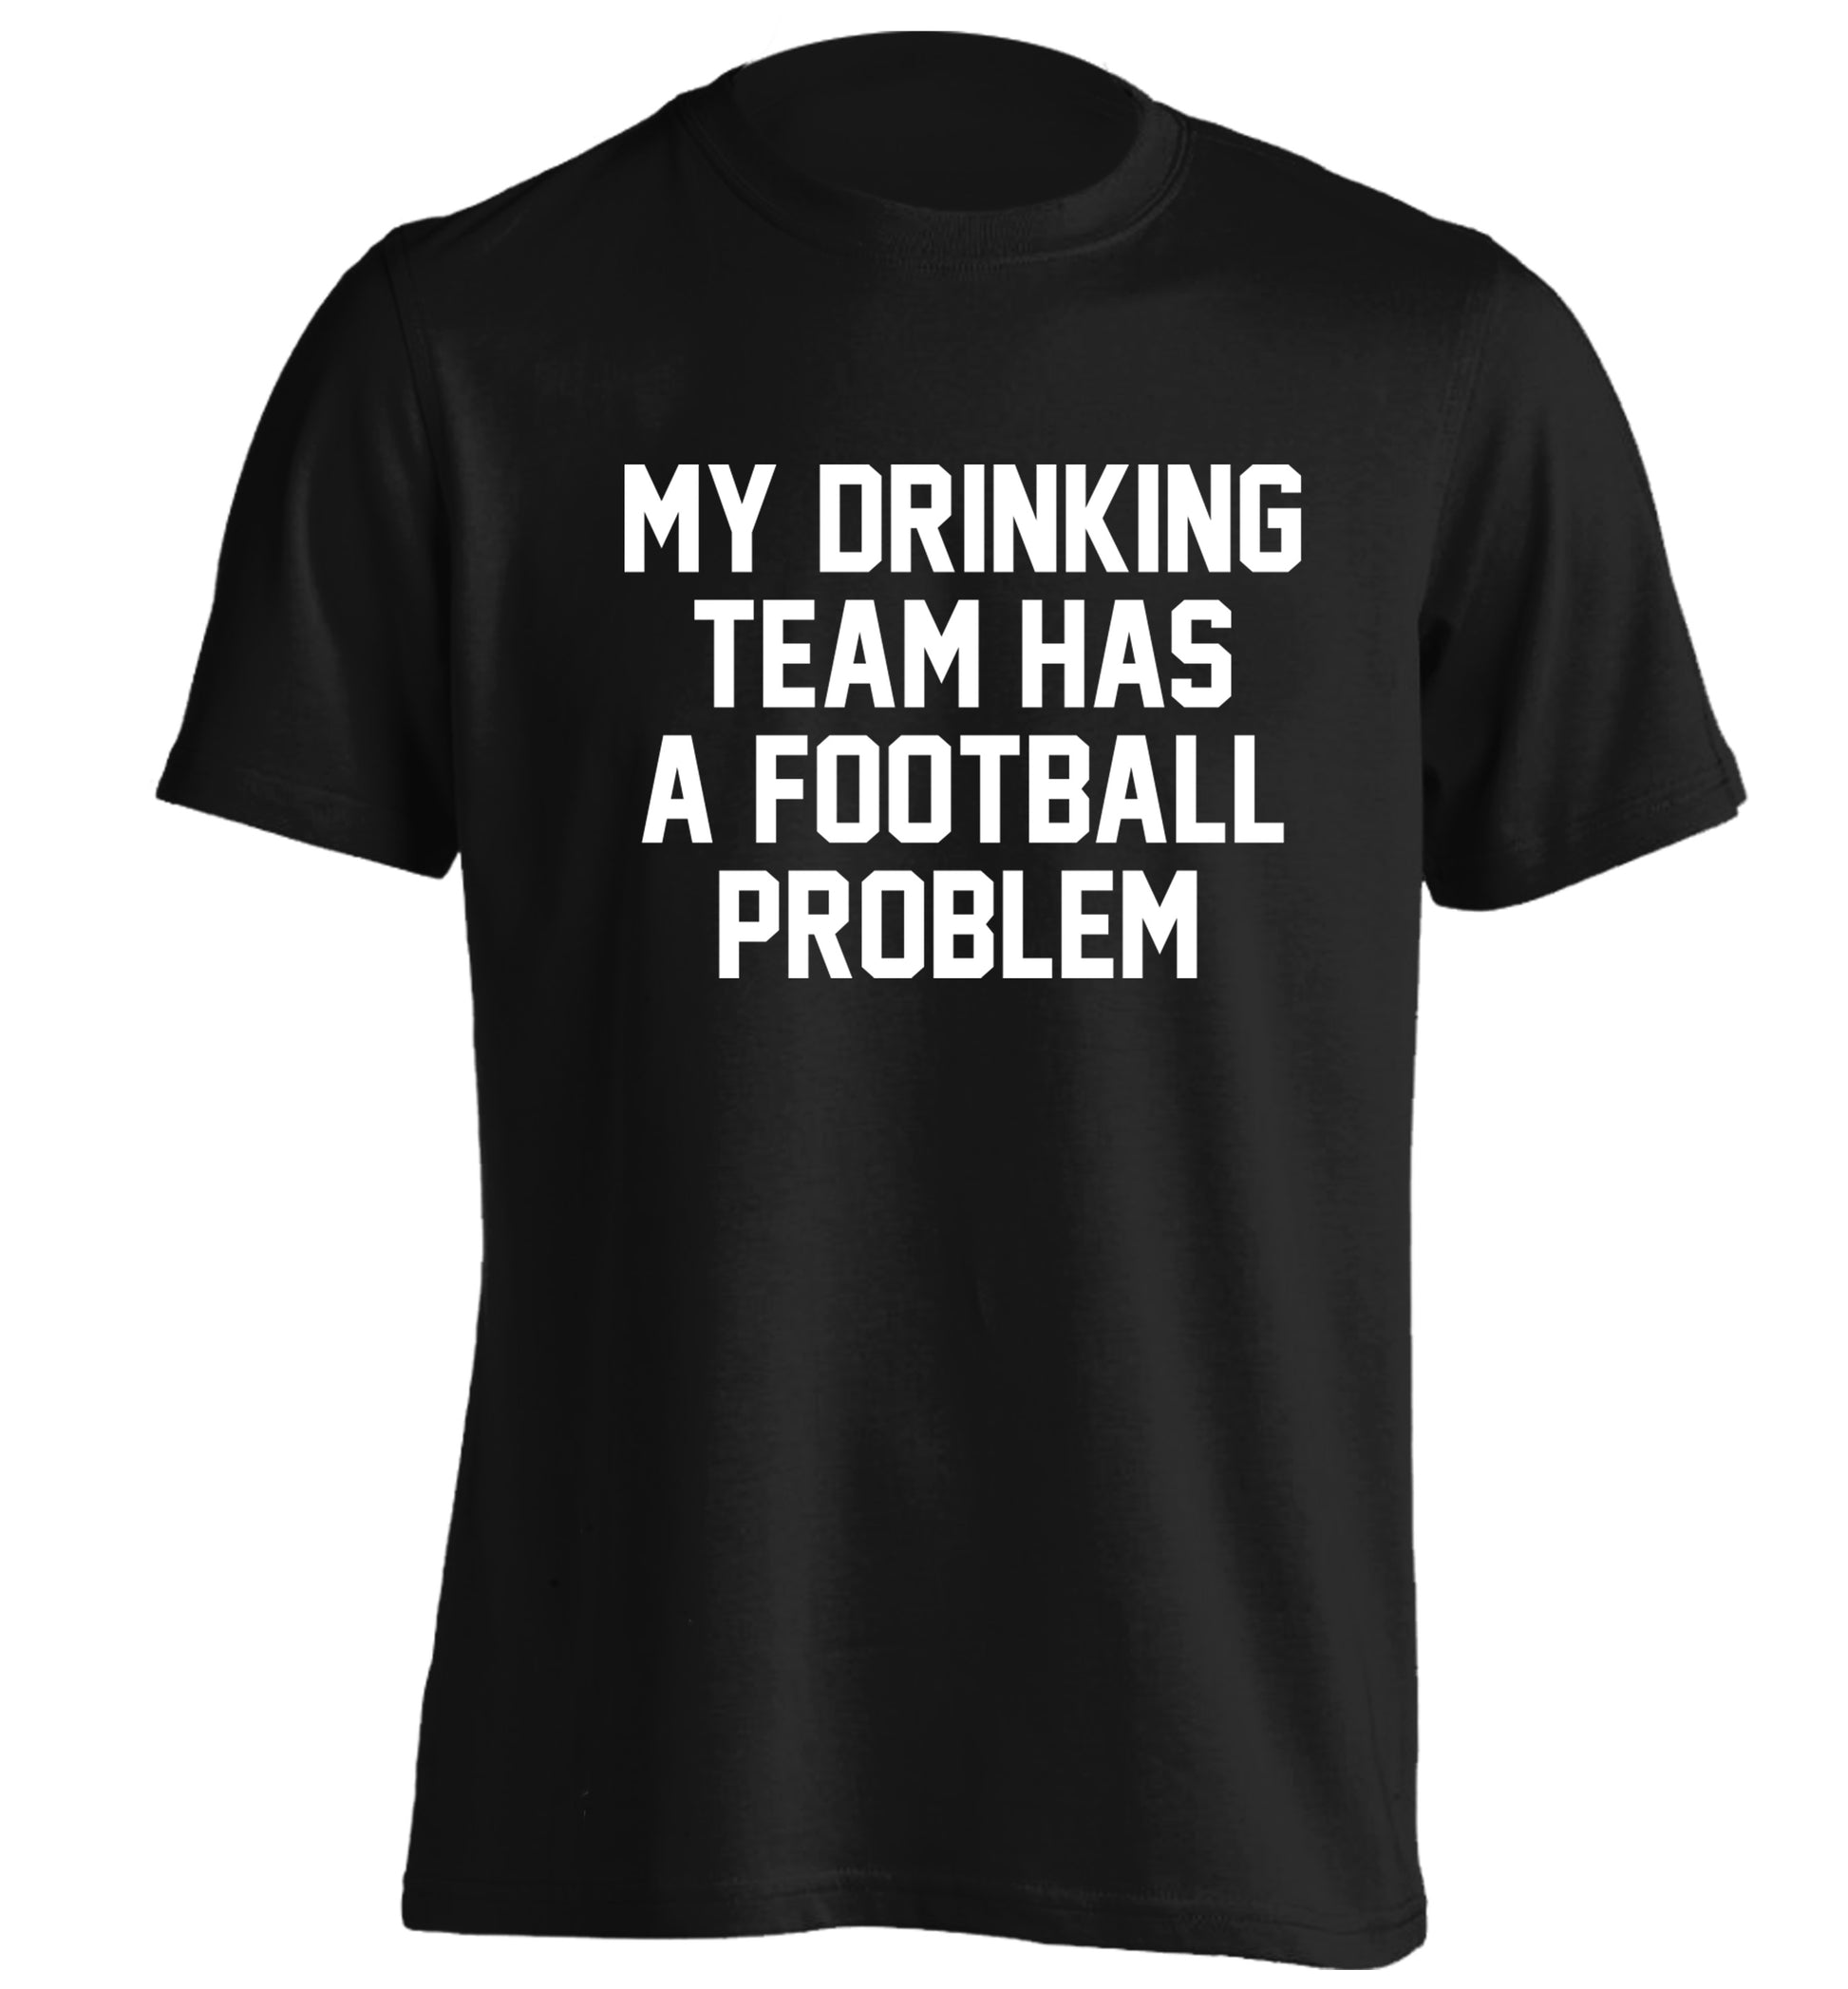 My drinking team has a football problem! adults unisexblack Tshirt 2XL